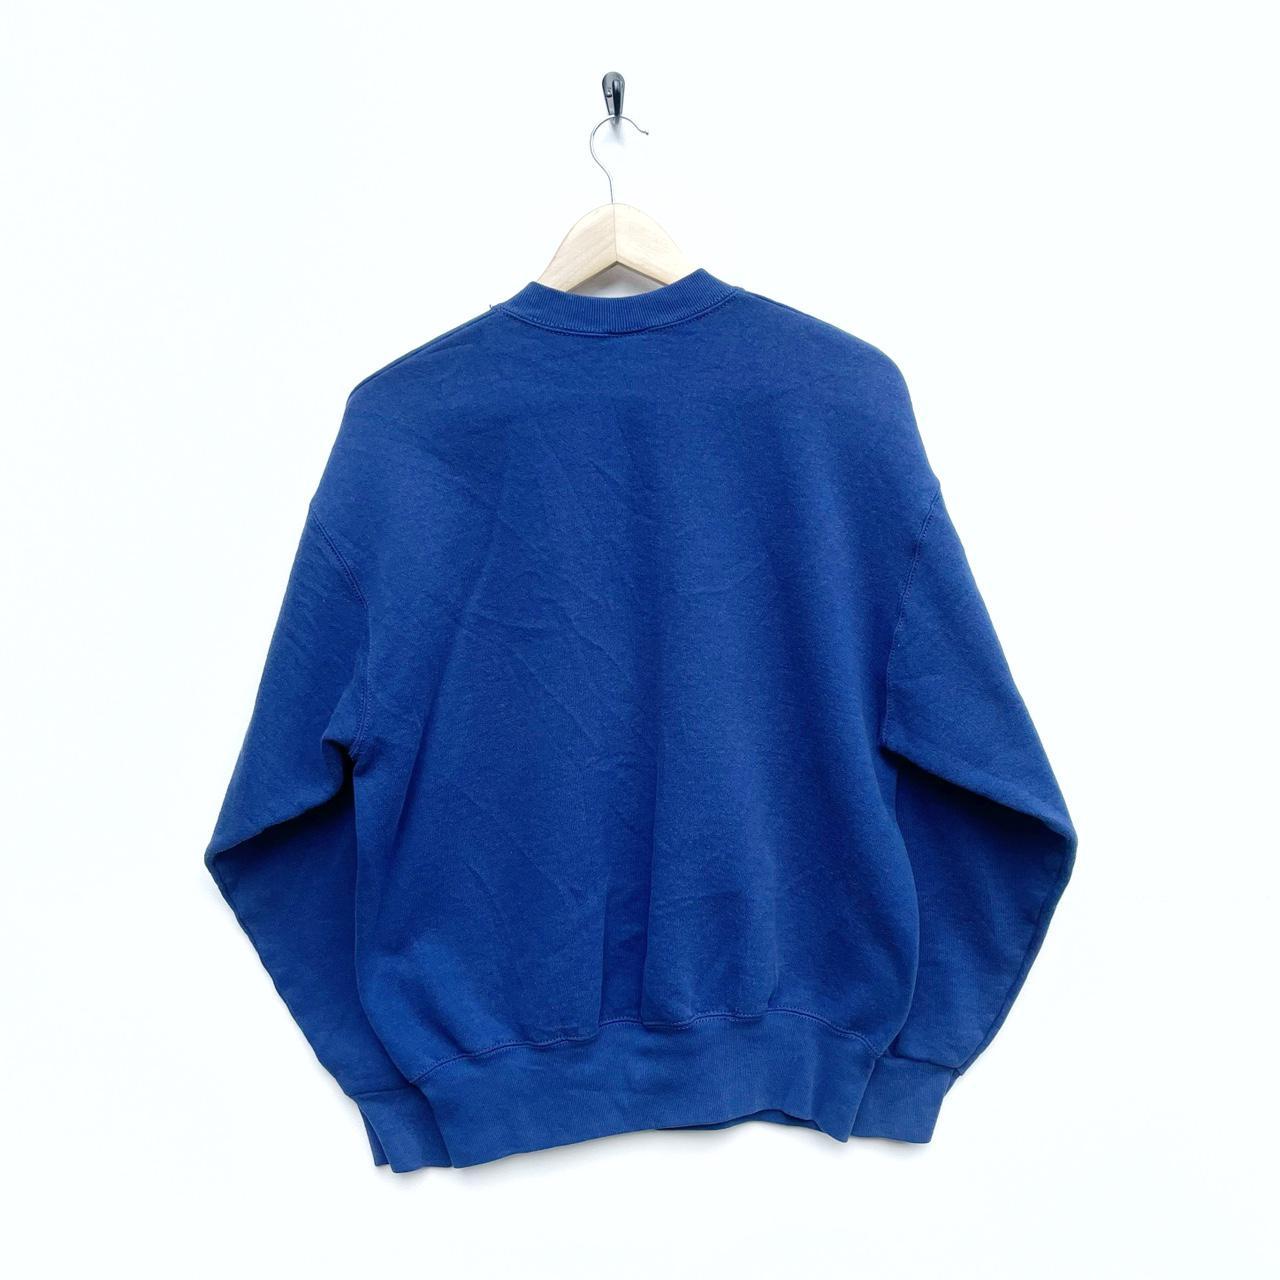 Vintage plain navy blue sweatshirt, great boxy... - Depop